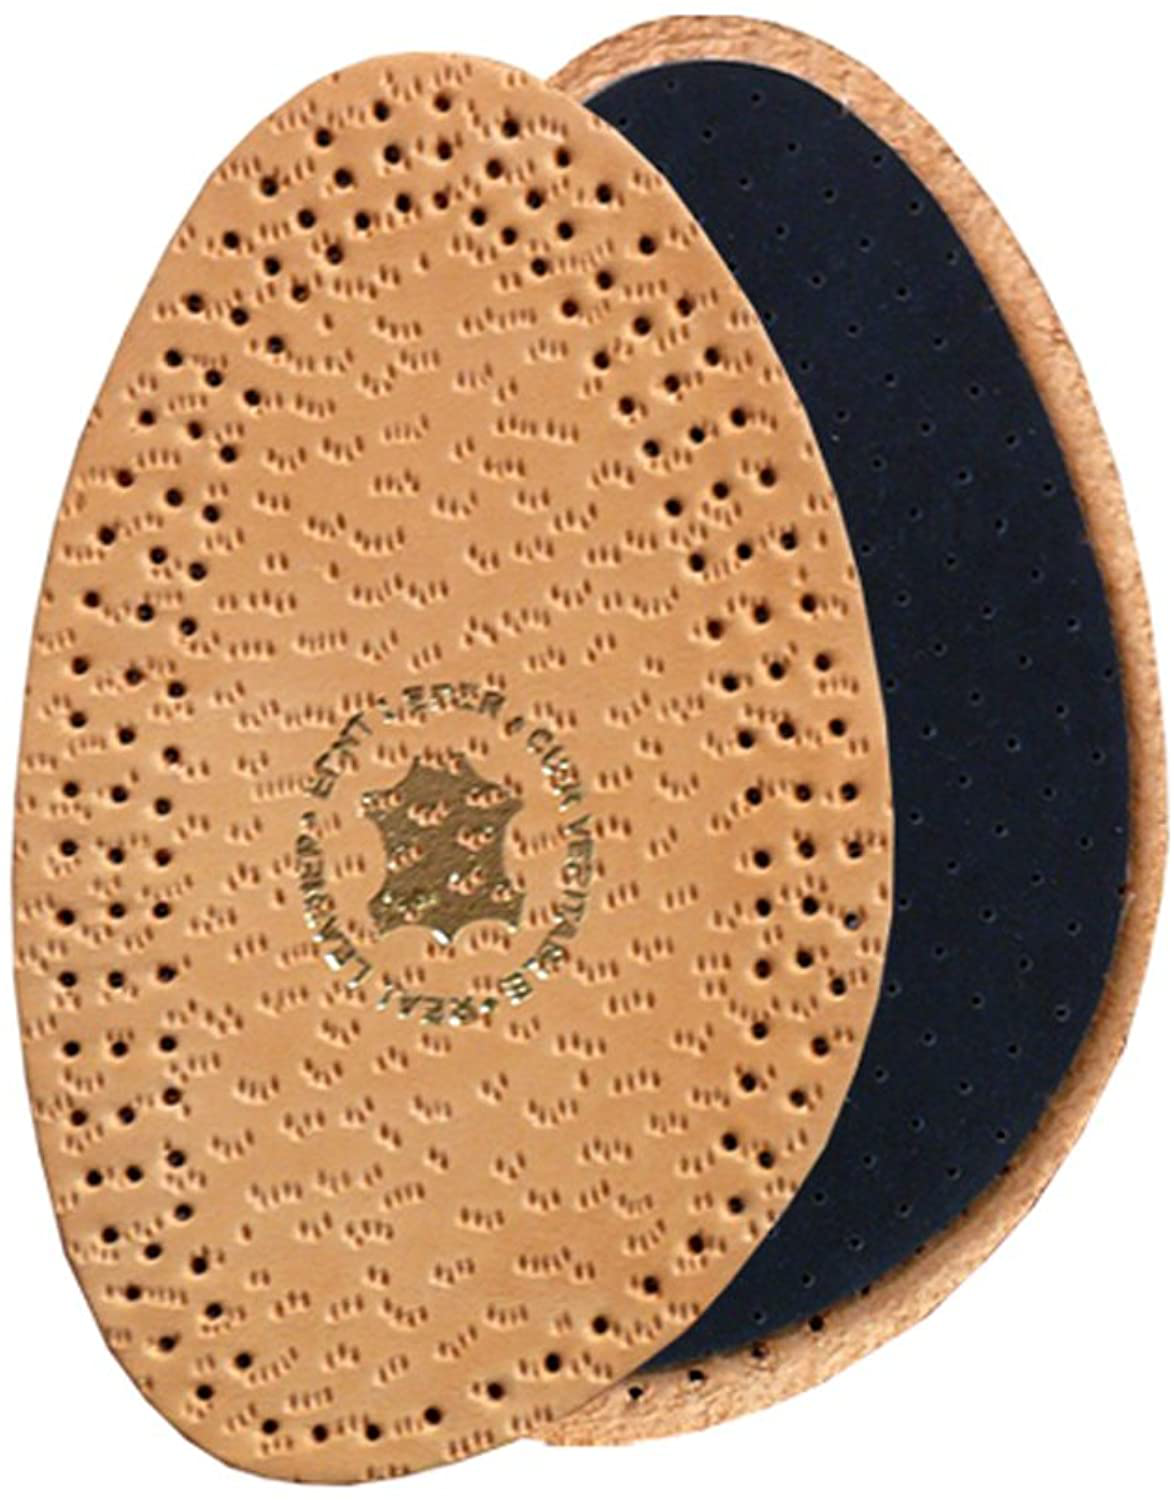 Kaps Halfix Half Insoles - Comfortable Premium Tan Leather & Latex